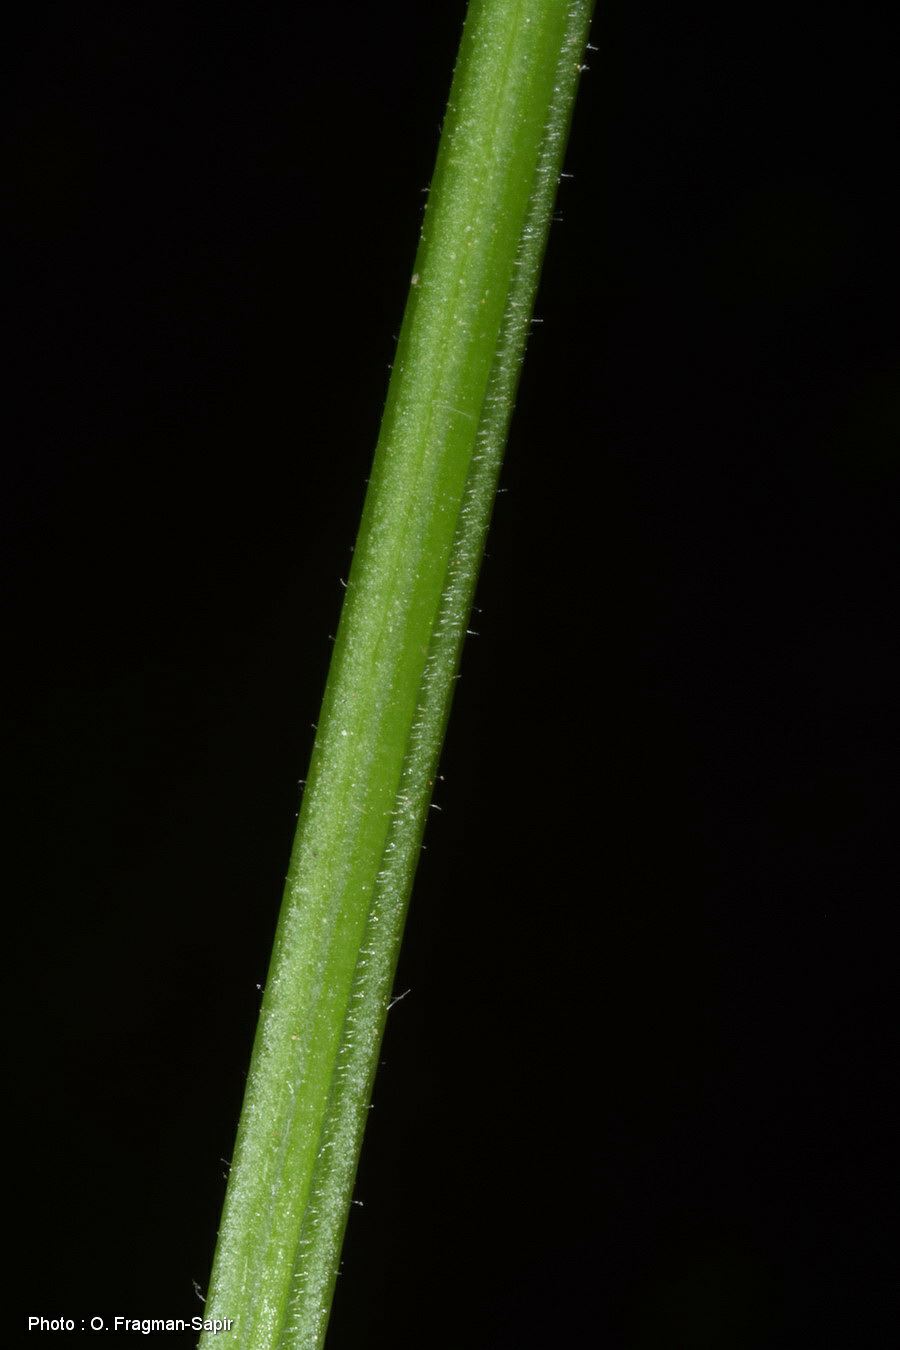 Epilobium parviflorum - Hoary Willow-Herb, Small-flowered Hairy Willowherb, ערברבה קטנת-פרחים, ערברבה קטנת-פרחים